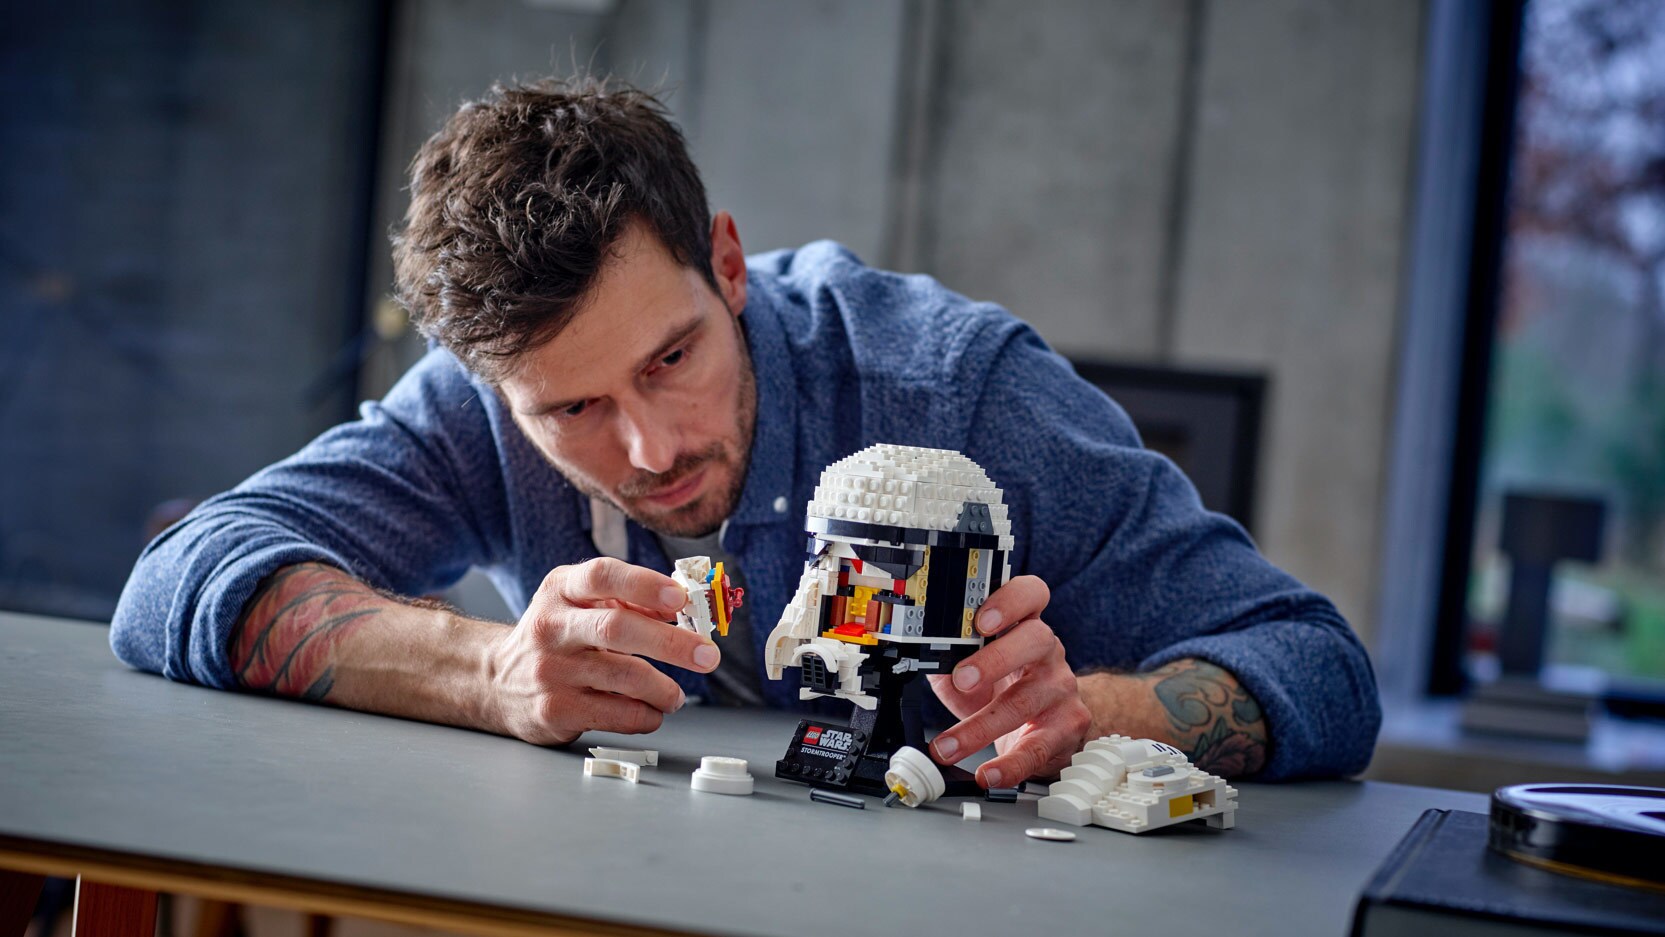 New LEGO® Star Wars™ helmets challenge builders to display their dark side